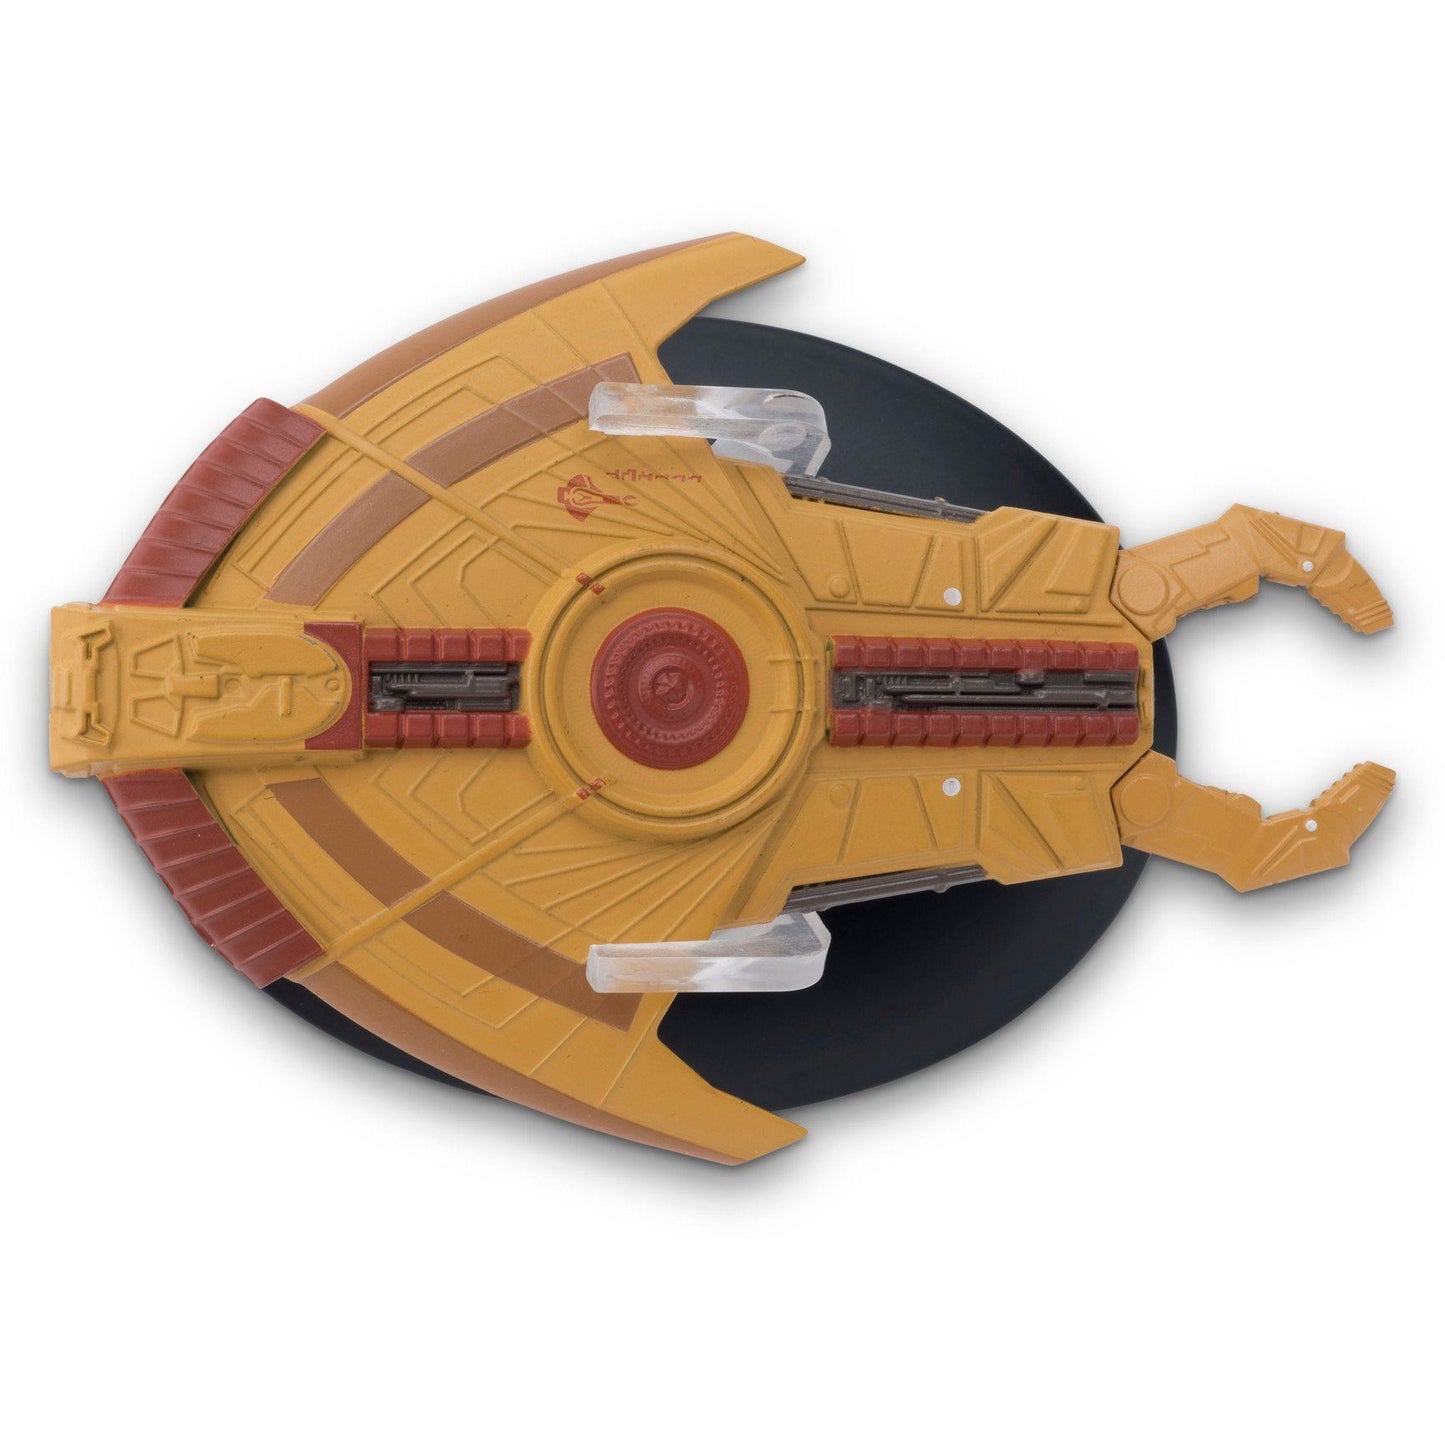 #33 Cardassian Hideki Starship Model Die Cast Ship Eaglemoss Star Trek